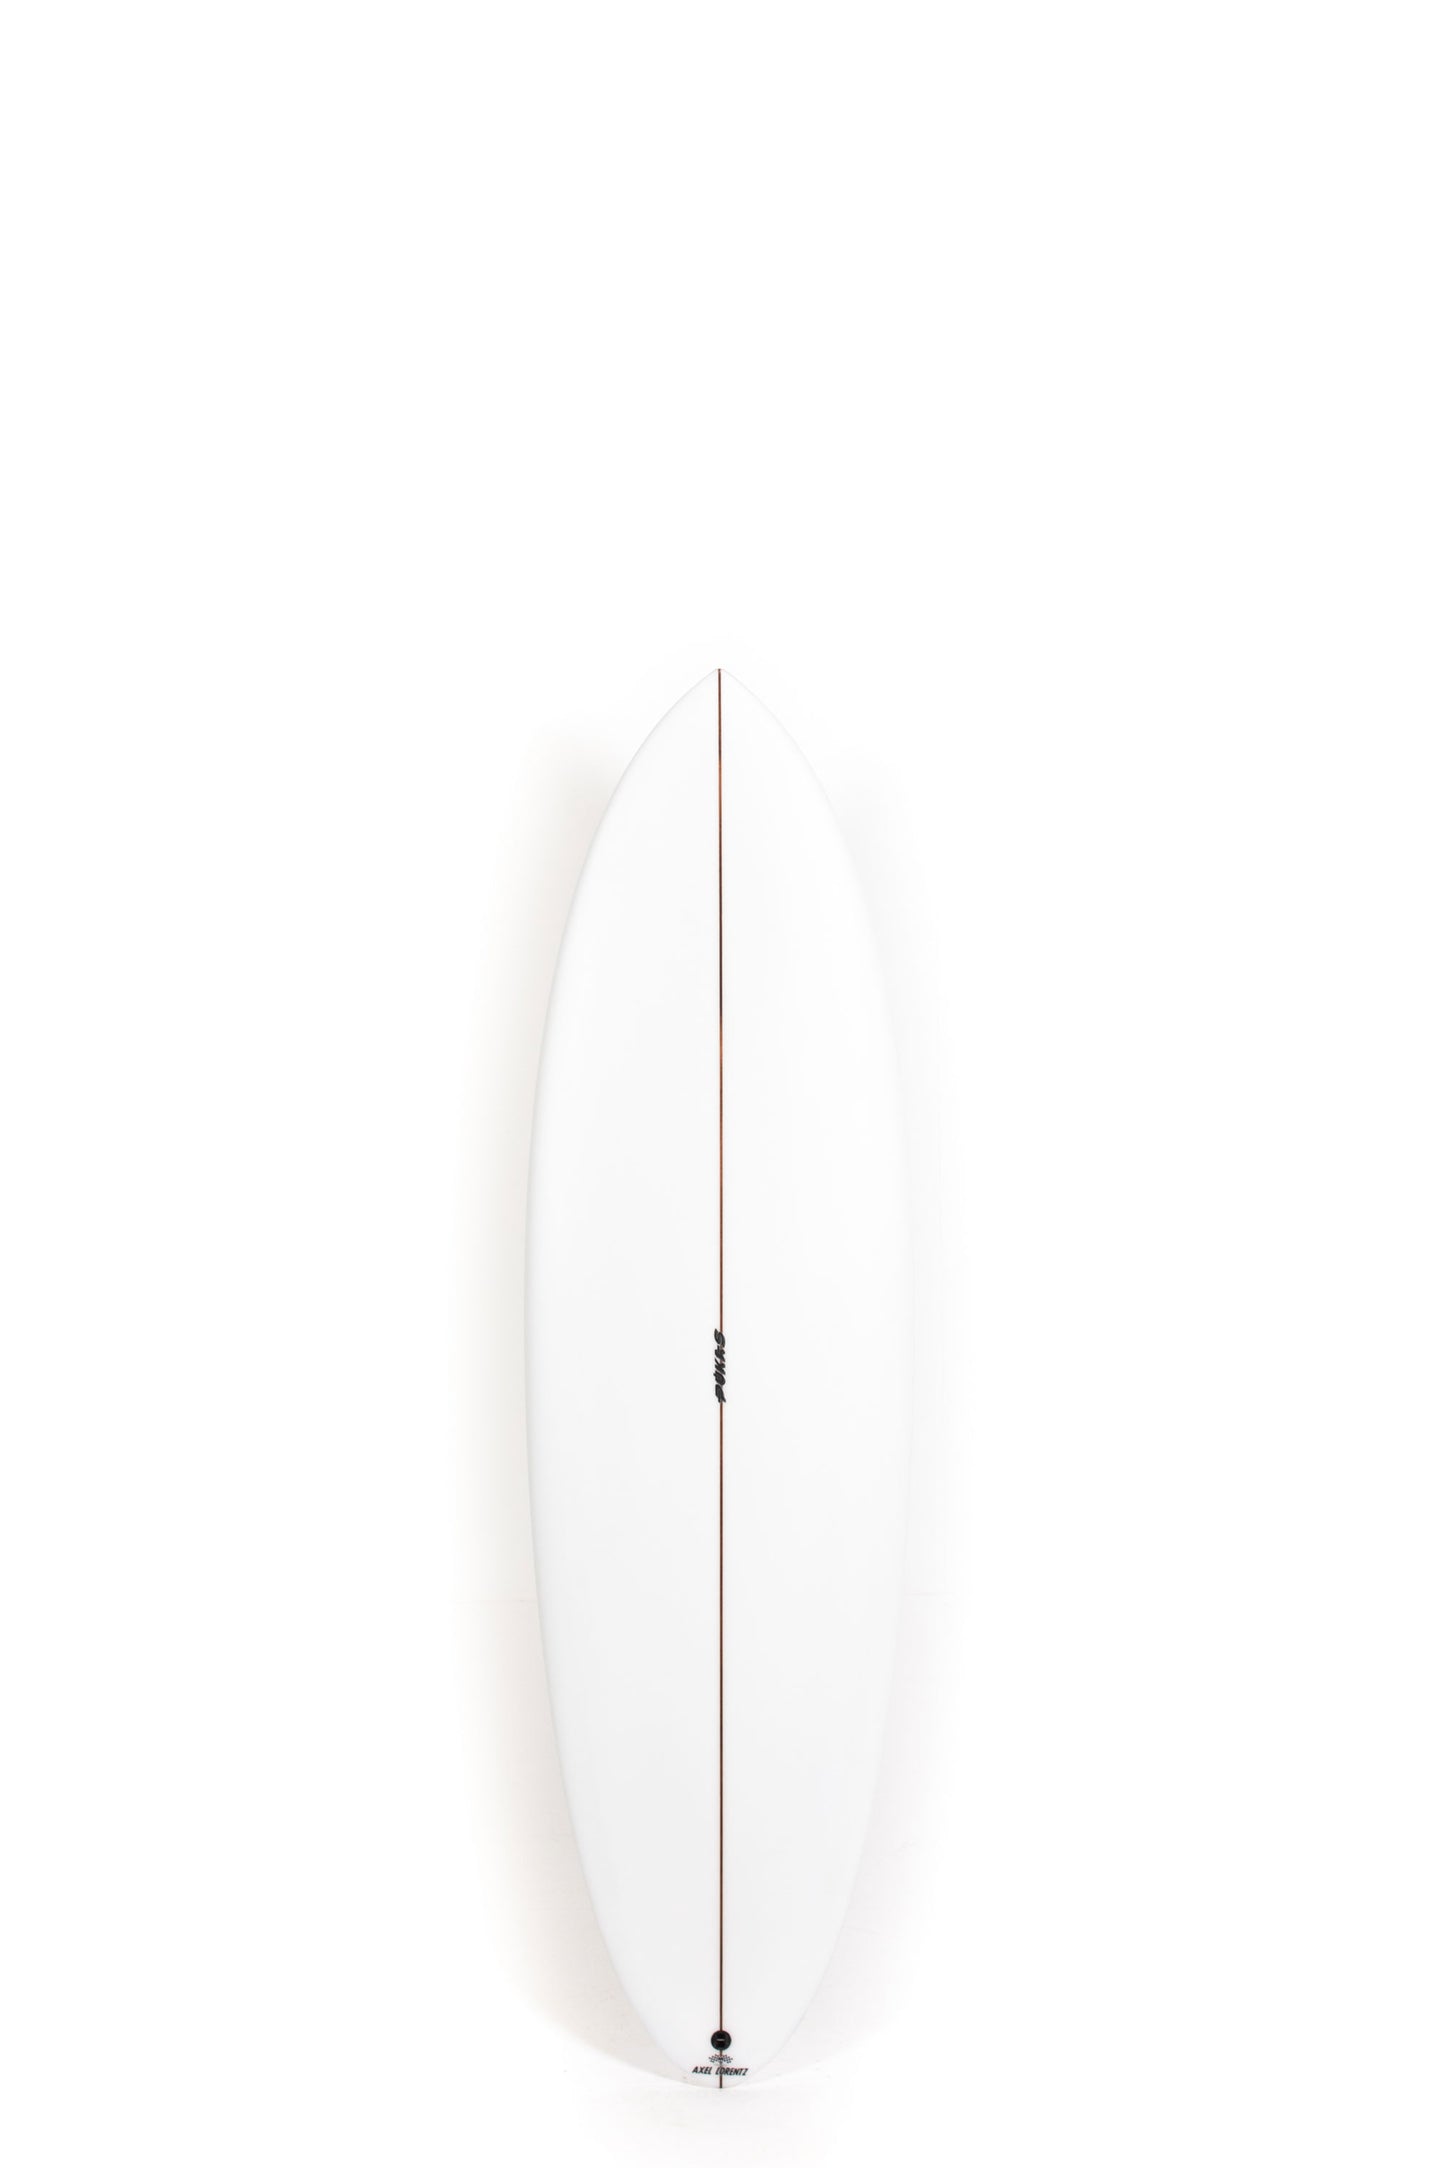 Pukas Surf Shop - Pukas Surfboard - LADY TWIN by Axel Lorentz - 6’2” x 20,5 x 2,63 - 34,9L - AX09451